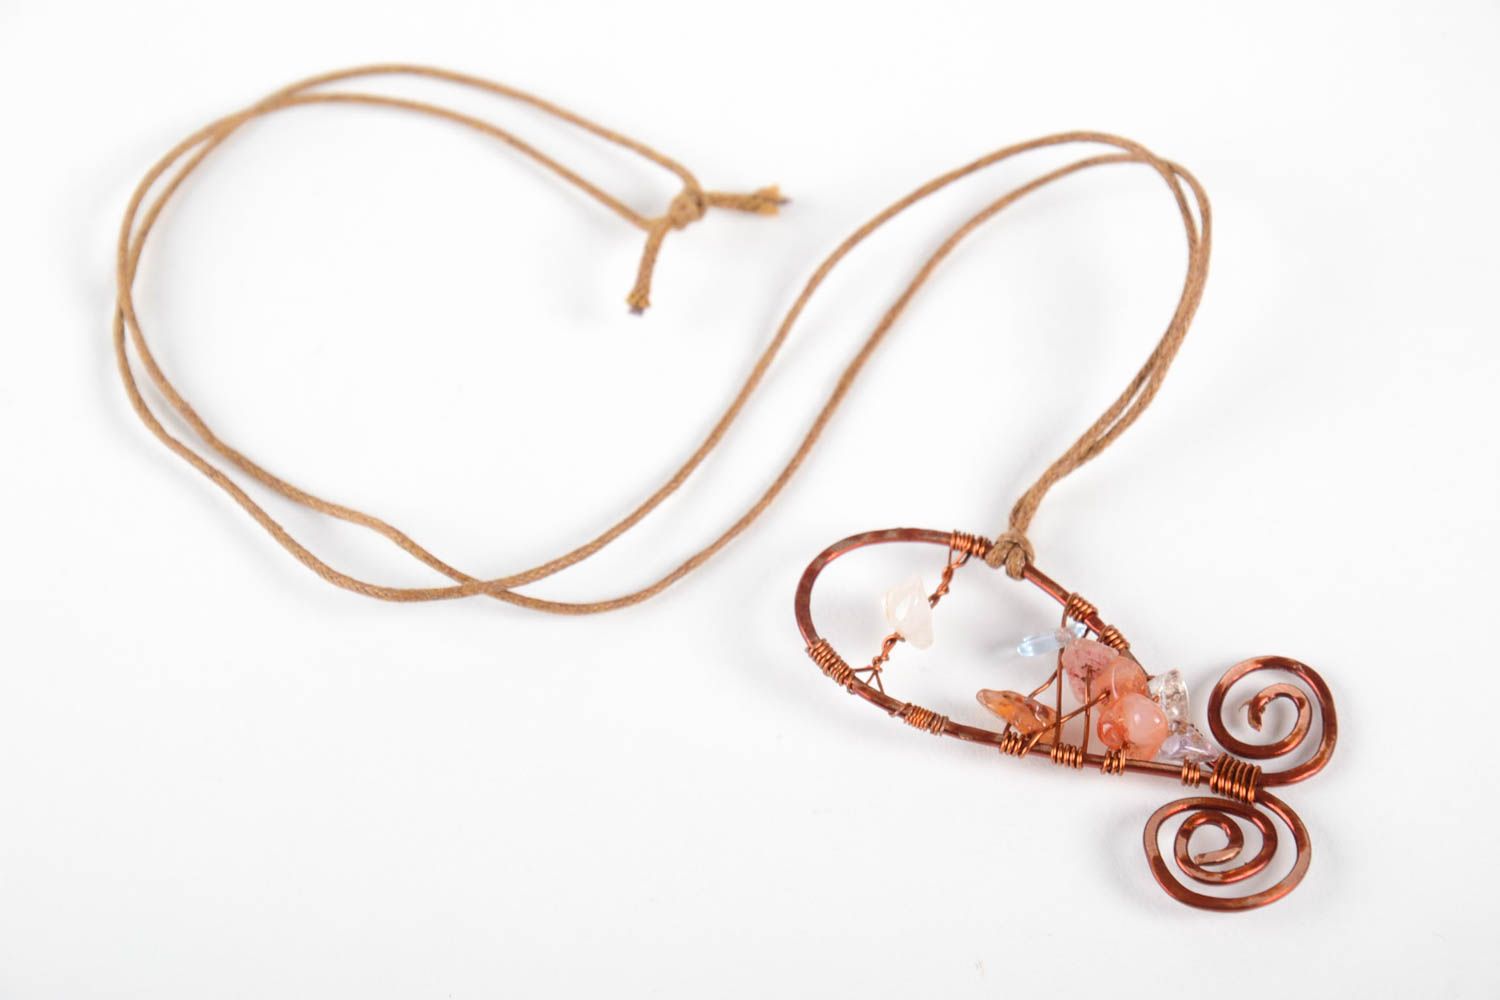 Handmade pendant unusual pendant designer accessory copper pendant gift ideas photo 4